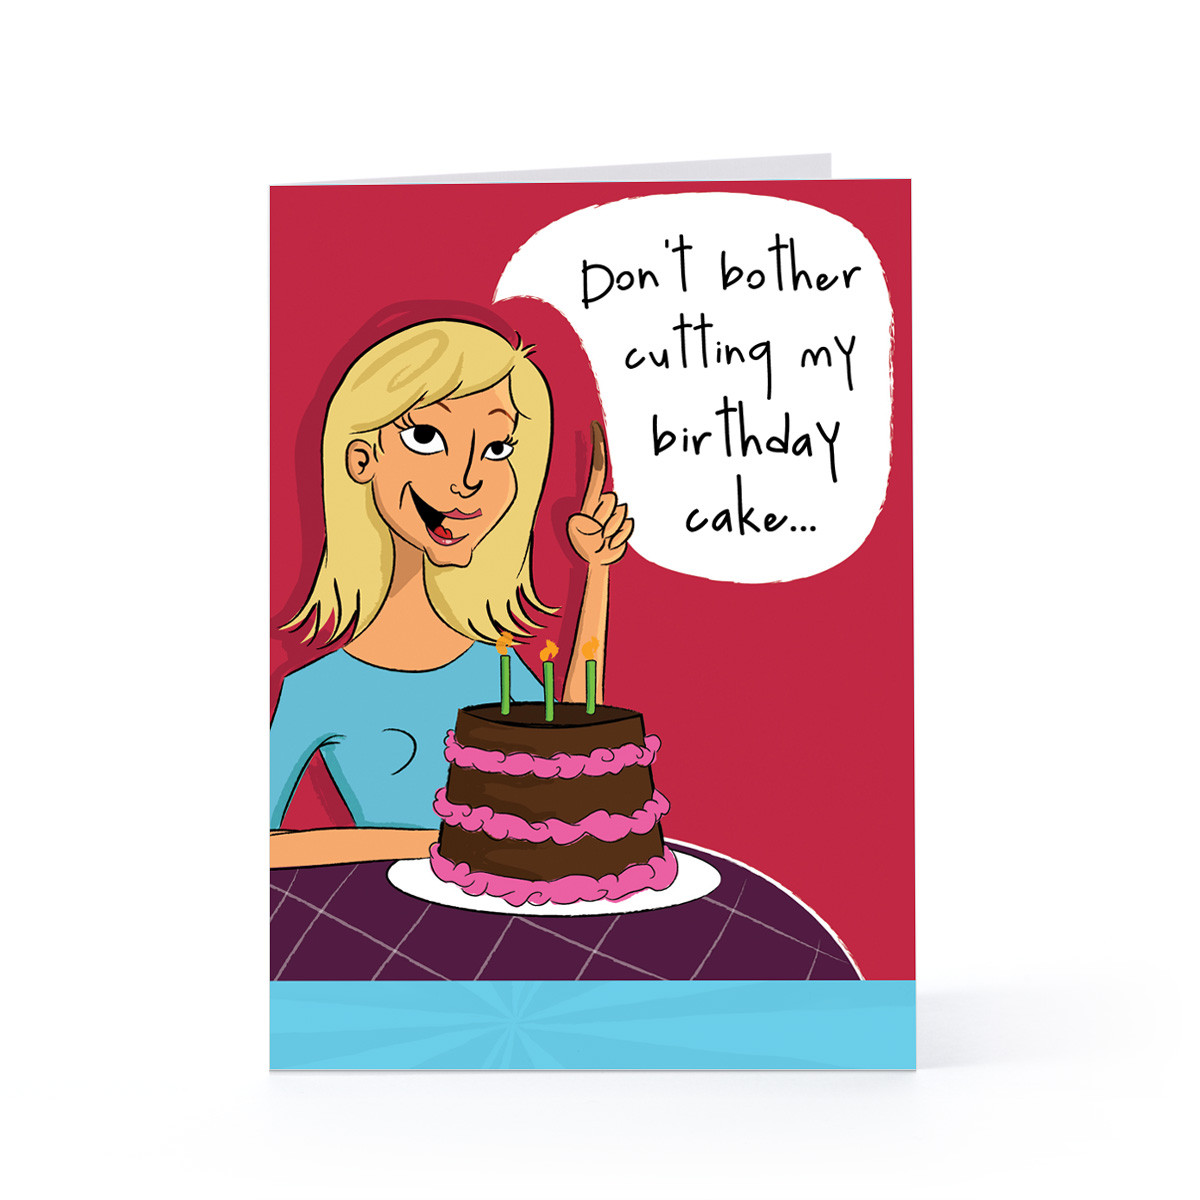 Quotes For Birthdays Cards
 Hallmark Card Quotes For Birthdays QuotesGram